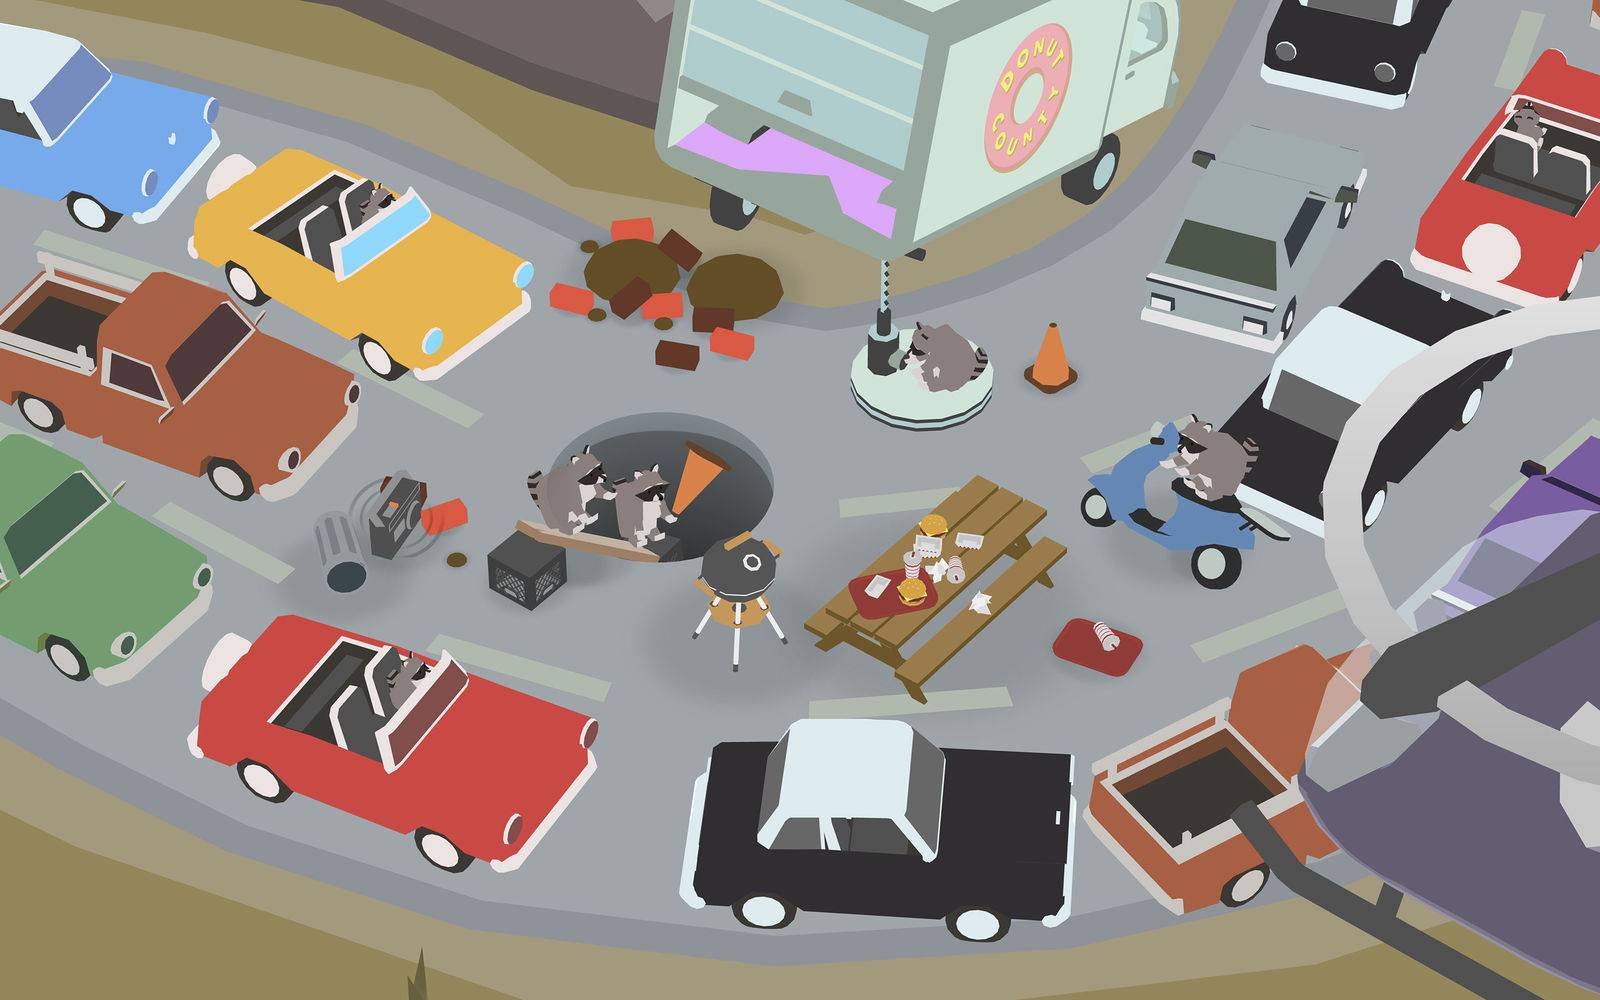 《Donut County》游戏插图